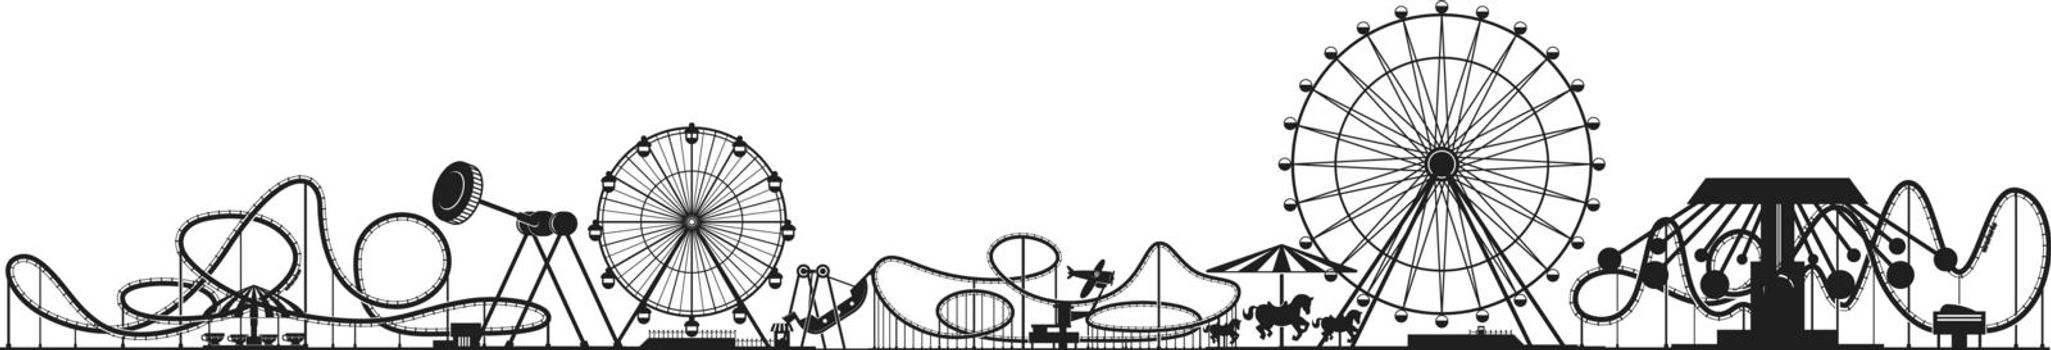 Amusement park panorama. Black line attraction icons